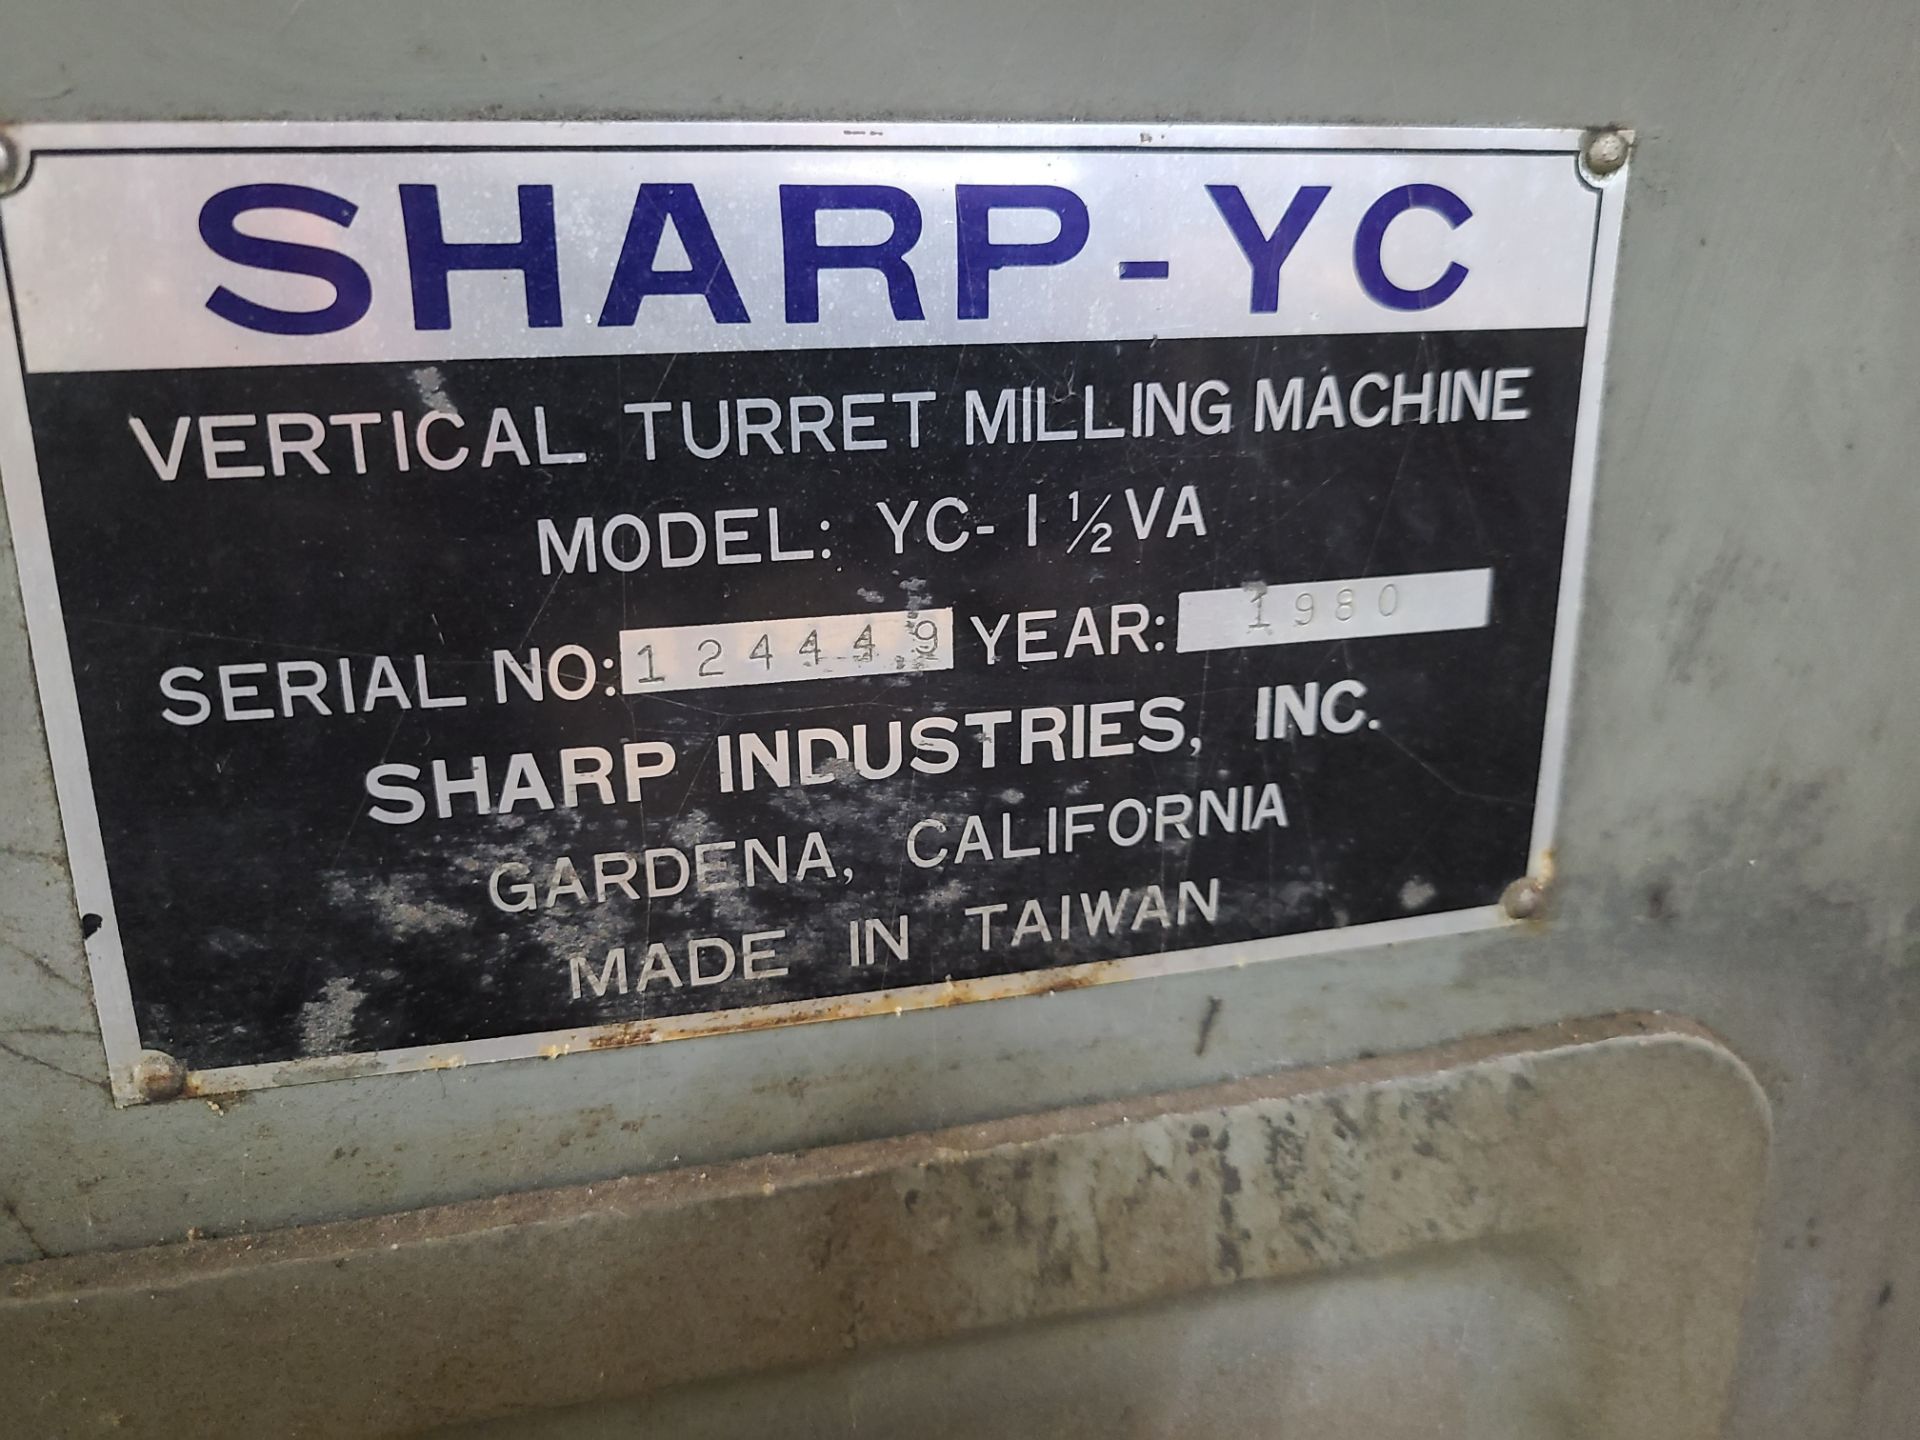 SHARP YC VERTICAL TURRET MILLING MACHINE: YEAR 1980 SERIAL 124449 MODEL AA109 - Image 6 of 6